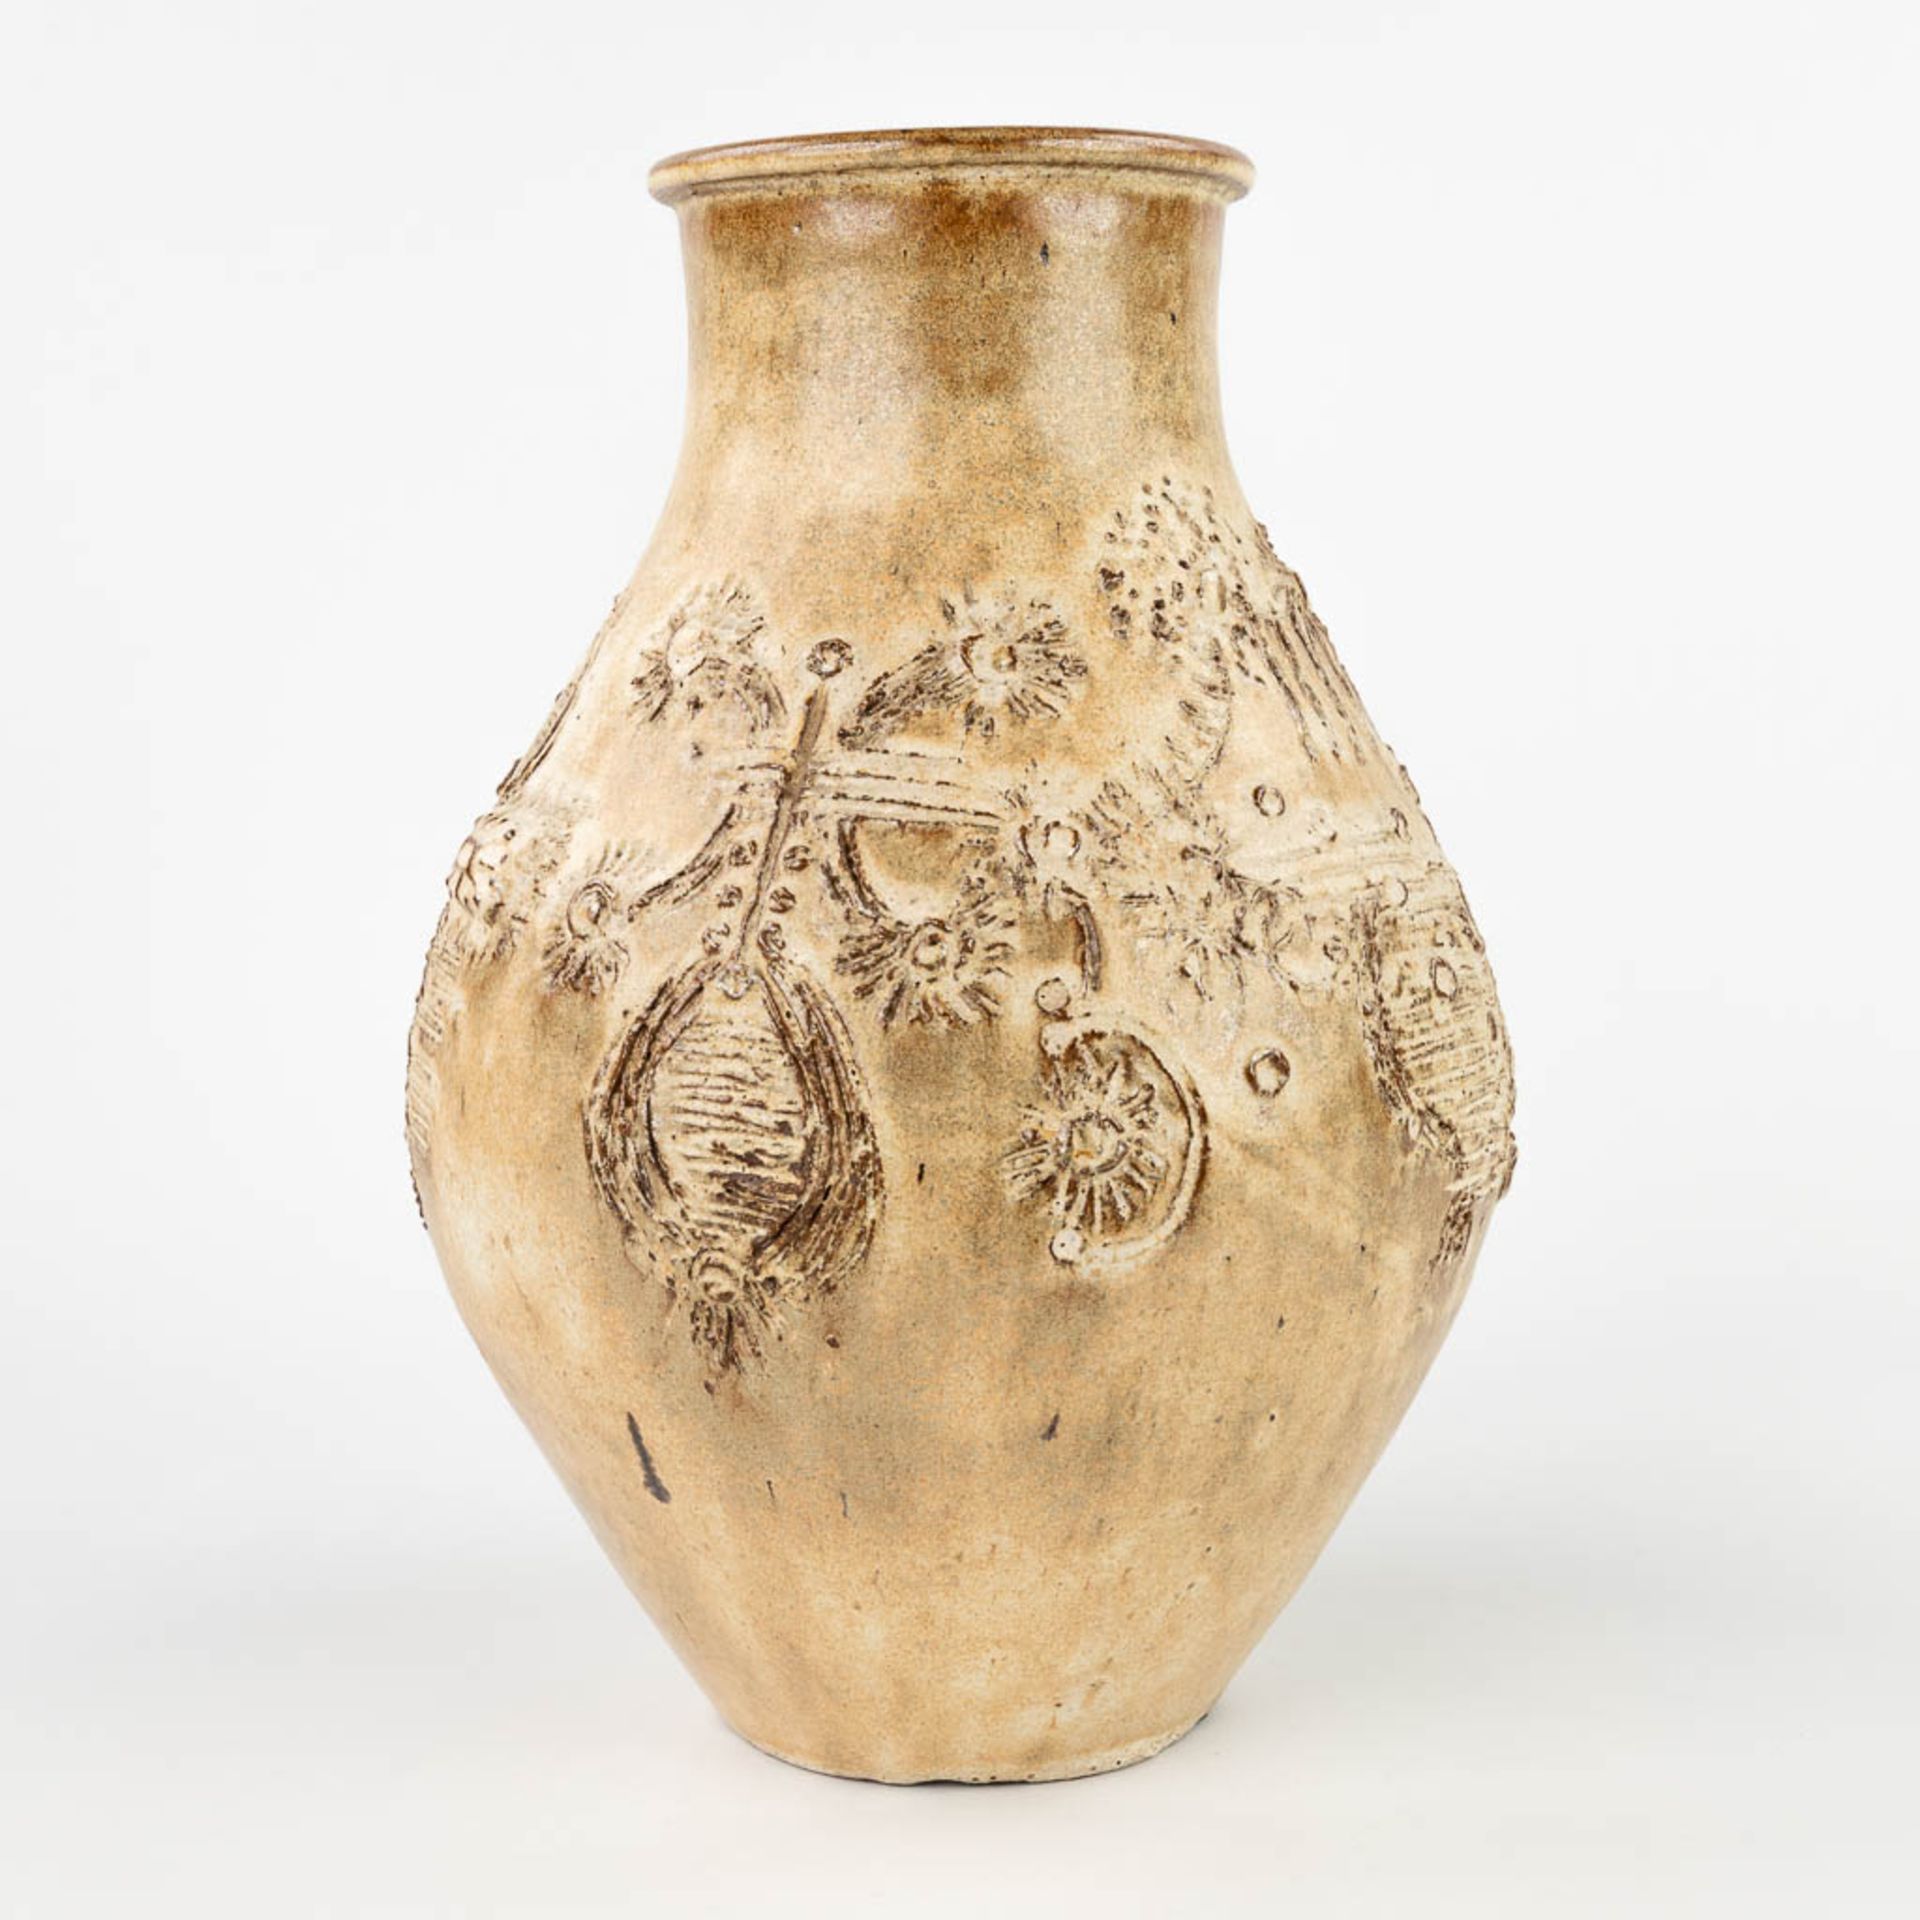 Rogier VANDEWEGHE (1923-2020) 'Vase' For Amphora. (H: 34 x D: 24 cm)